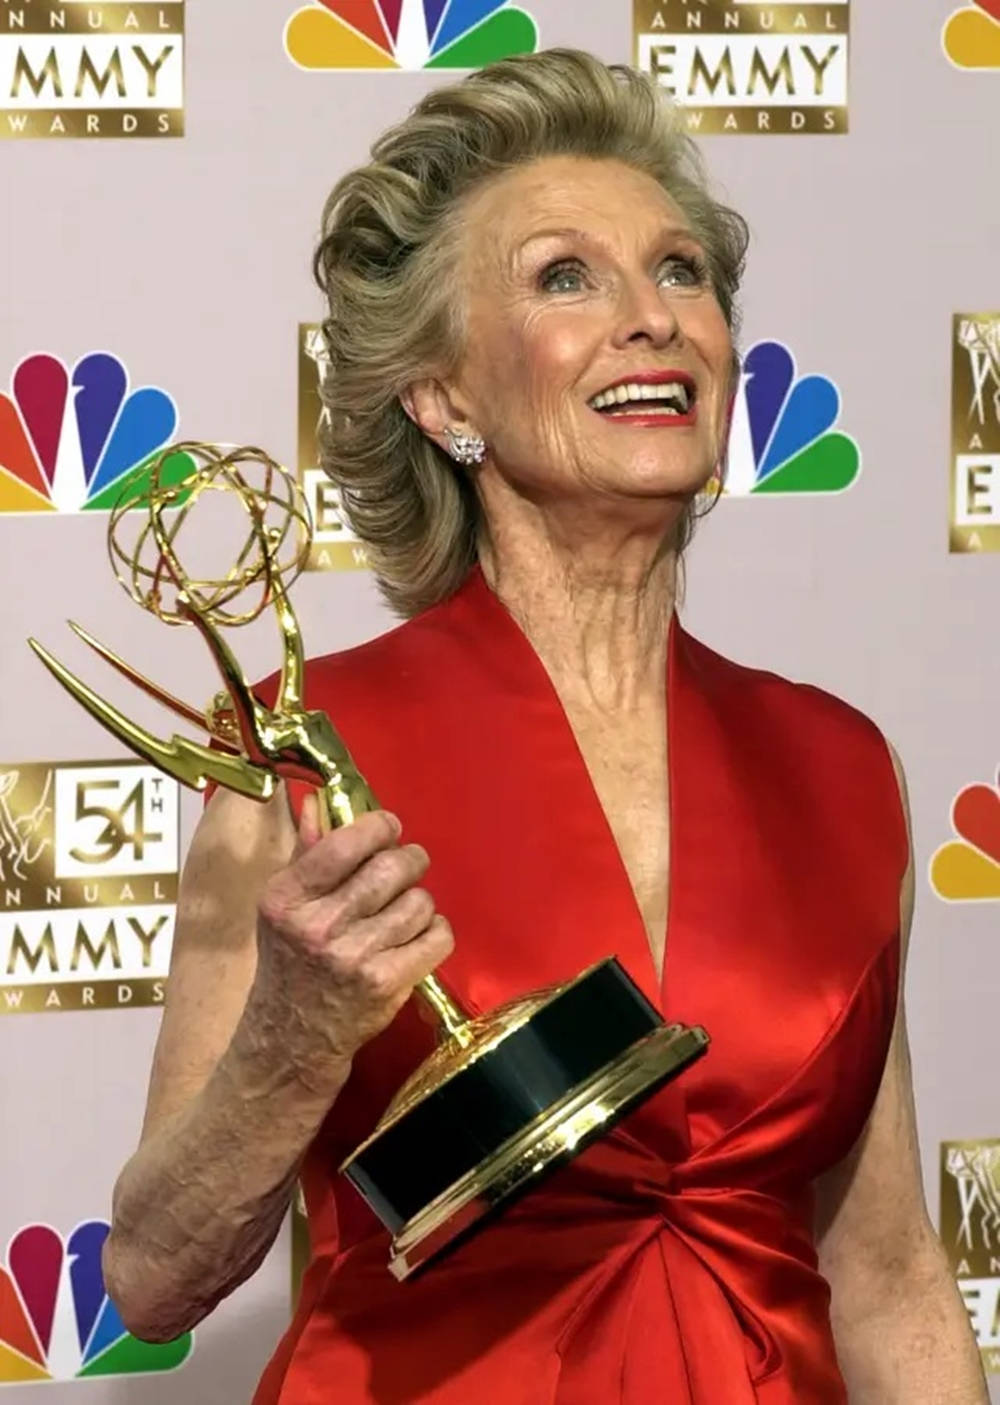 Clorisleachman 54:e Årliga Emmy Awards Can Be Translated To 